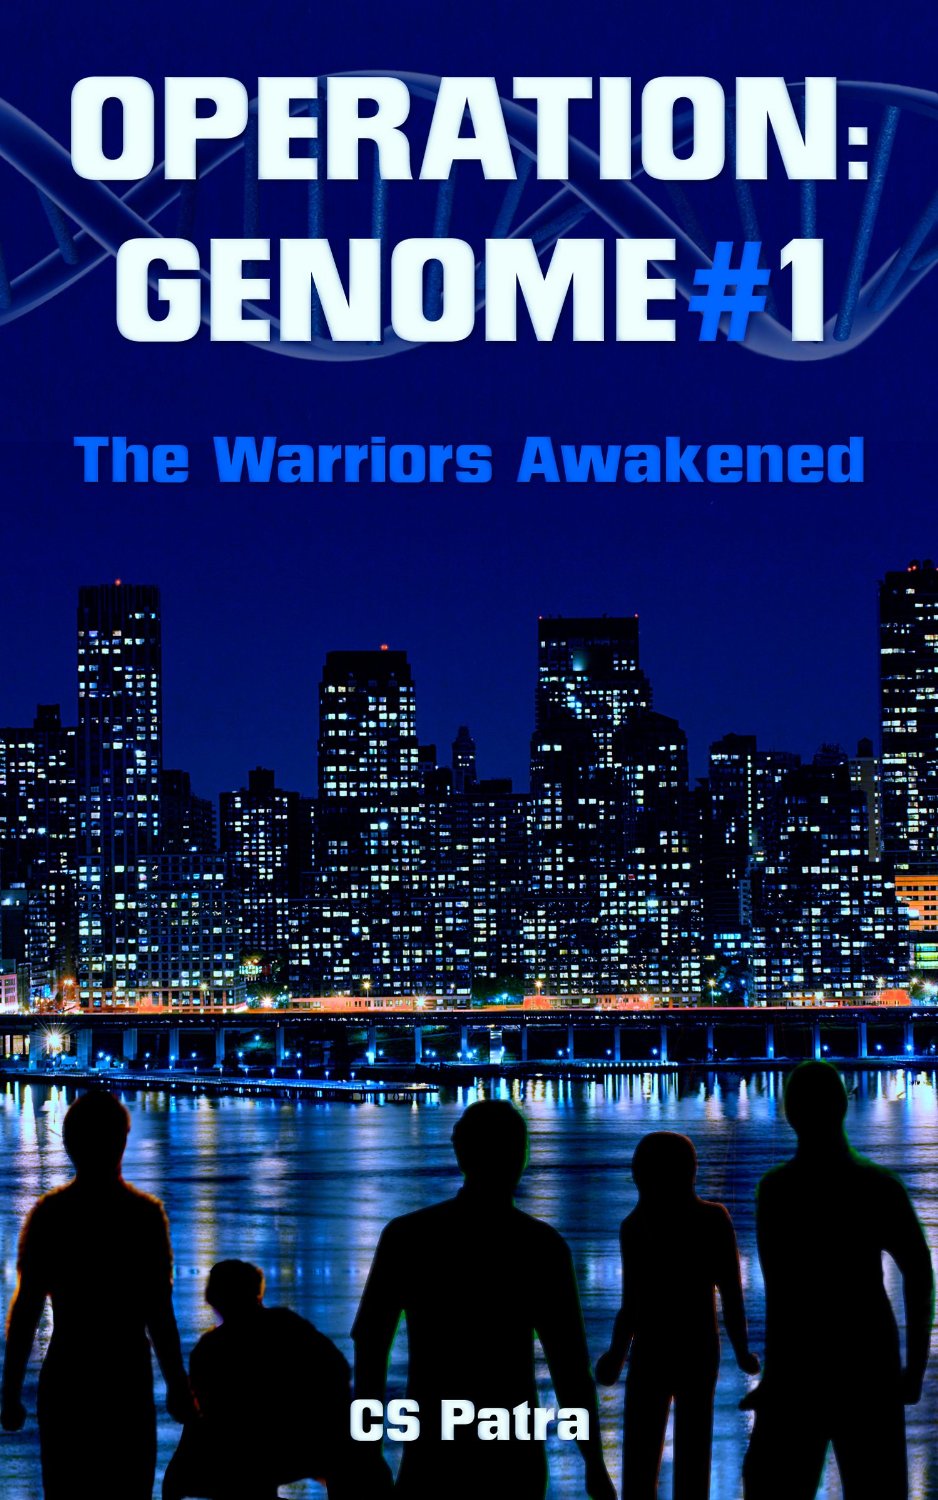 Operation: Genome #1: The Warriors Awakened by CS Patra